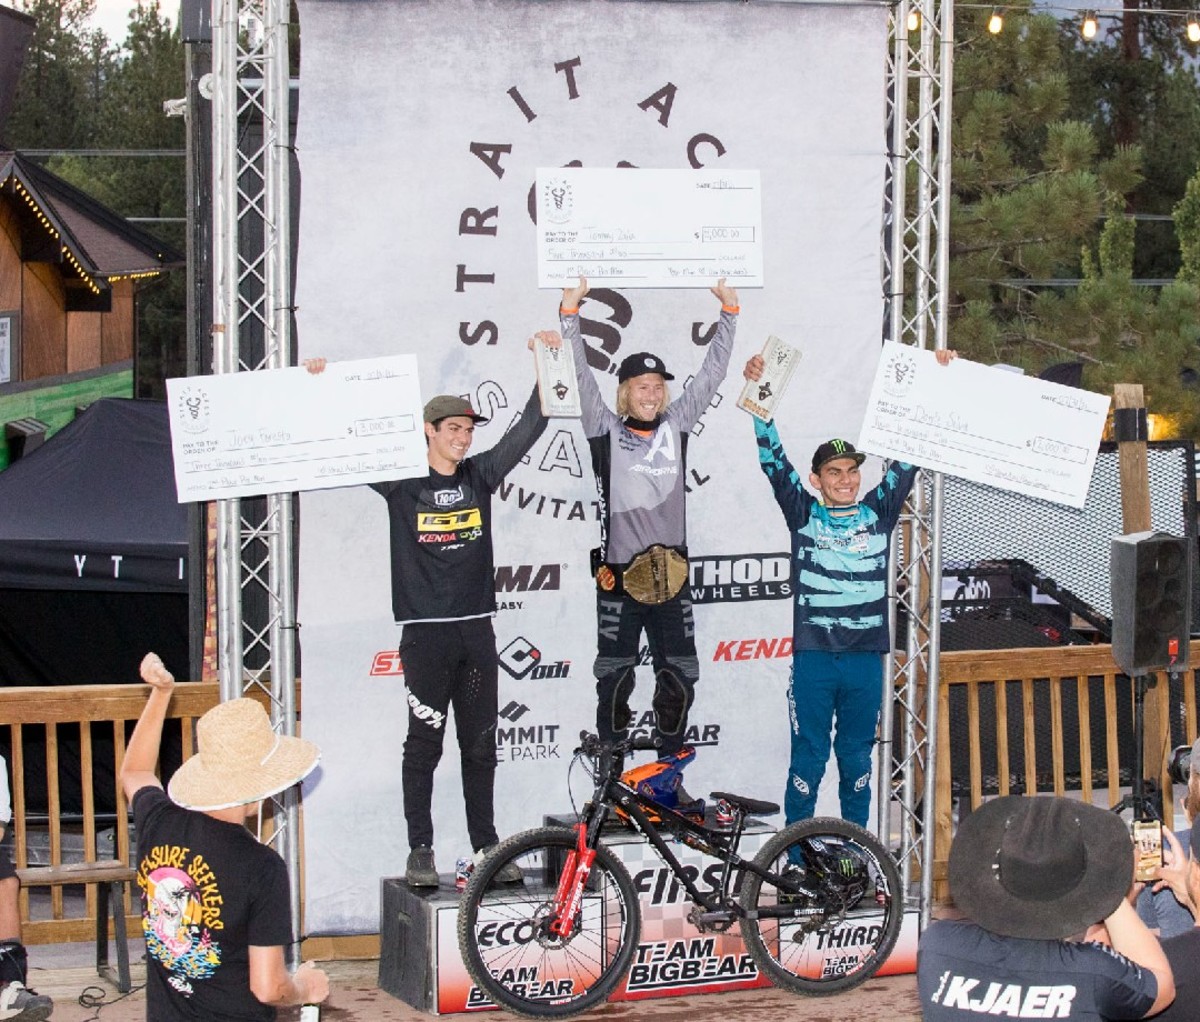 3 bike racers on the winner's podium holding giant checks above their heads.